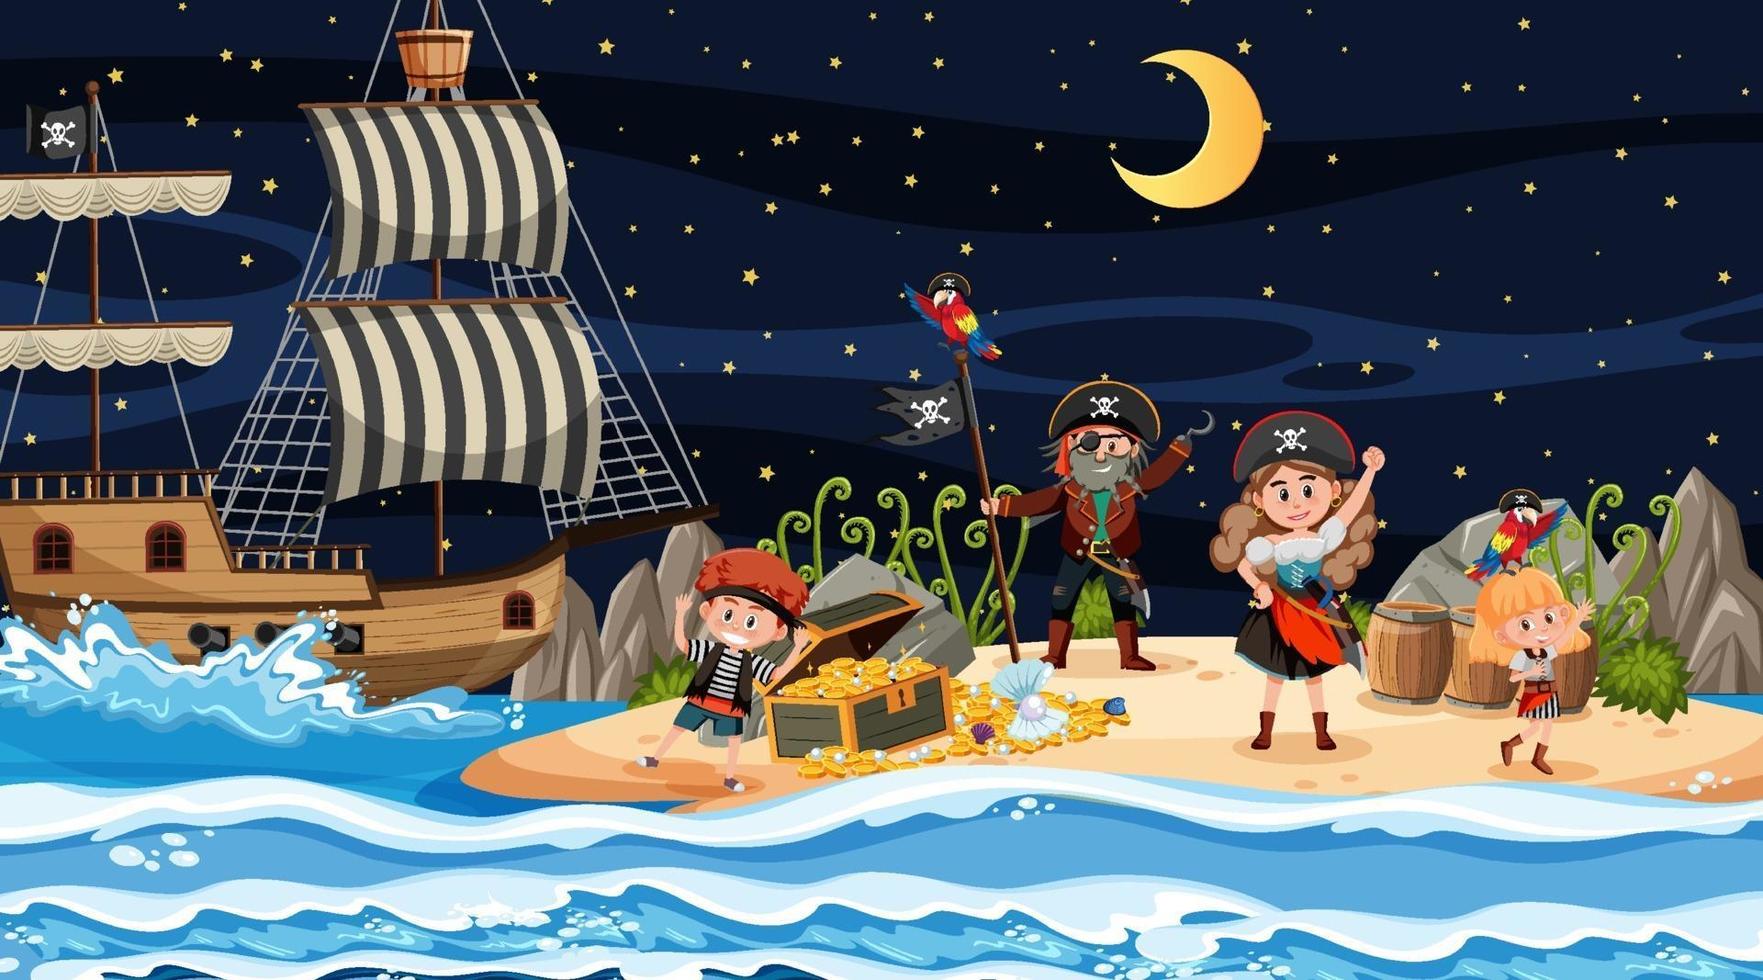 Treasure Island scene at night with Pirate kids vector